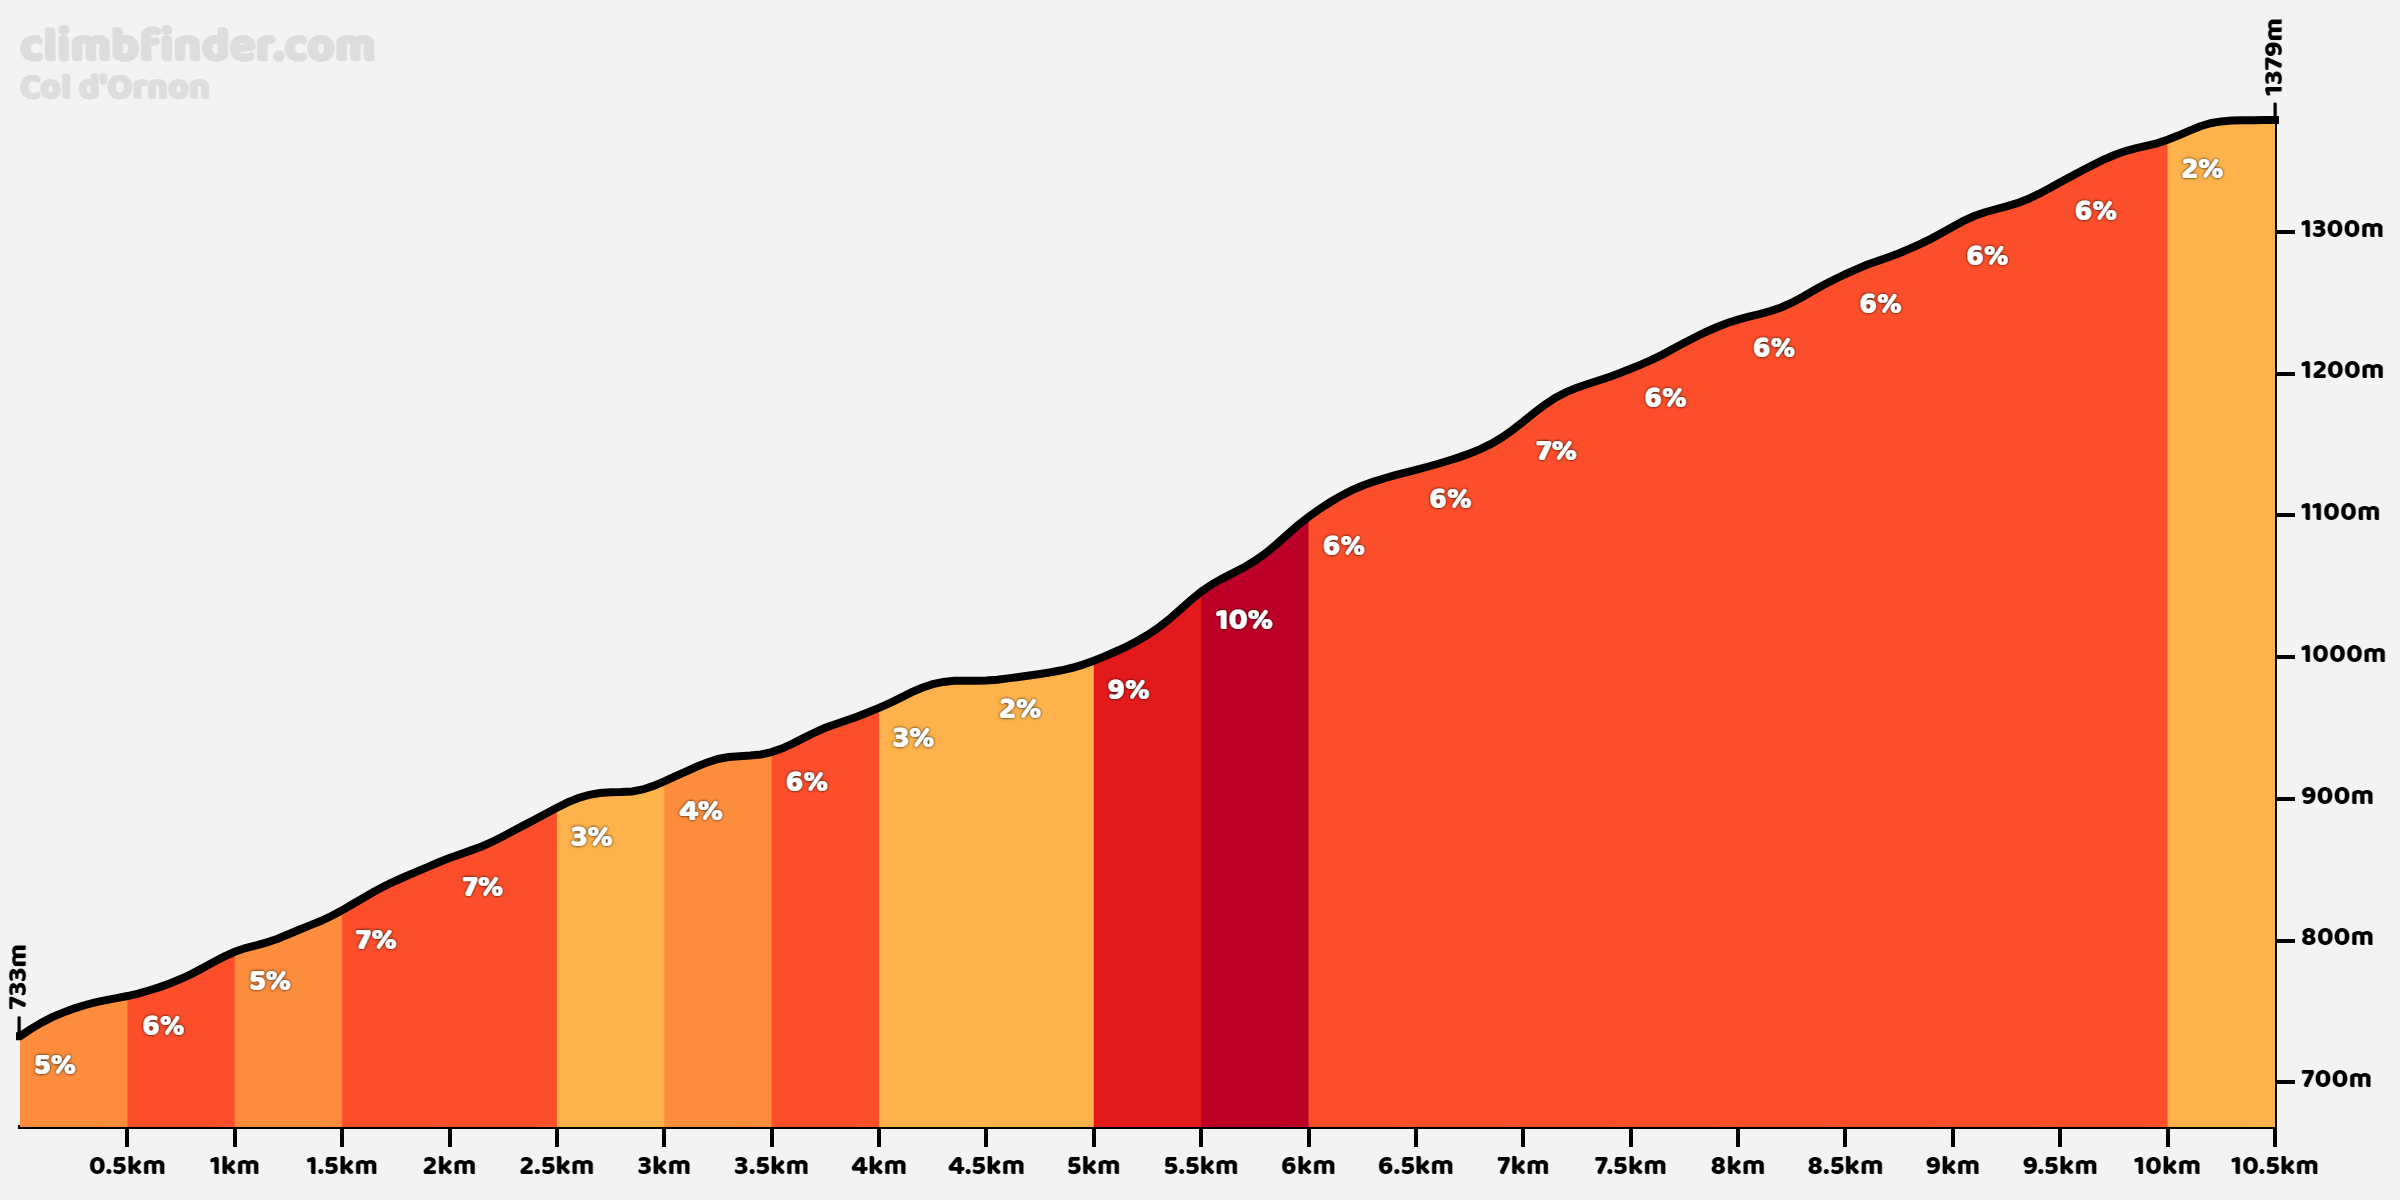 Profiel van beklimming Col d'Ornon met stijgingspercentages per halve kilometer van Climbfinder